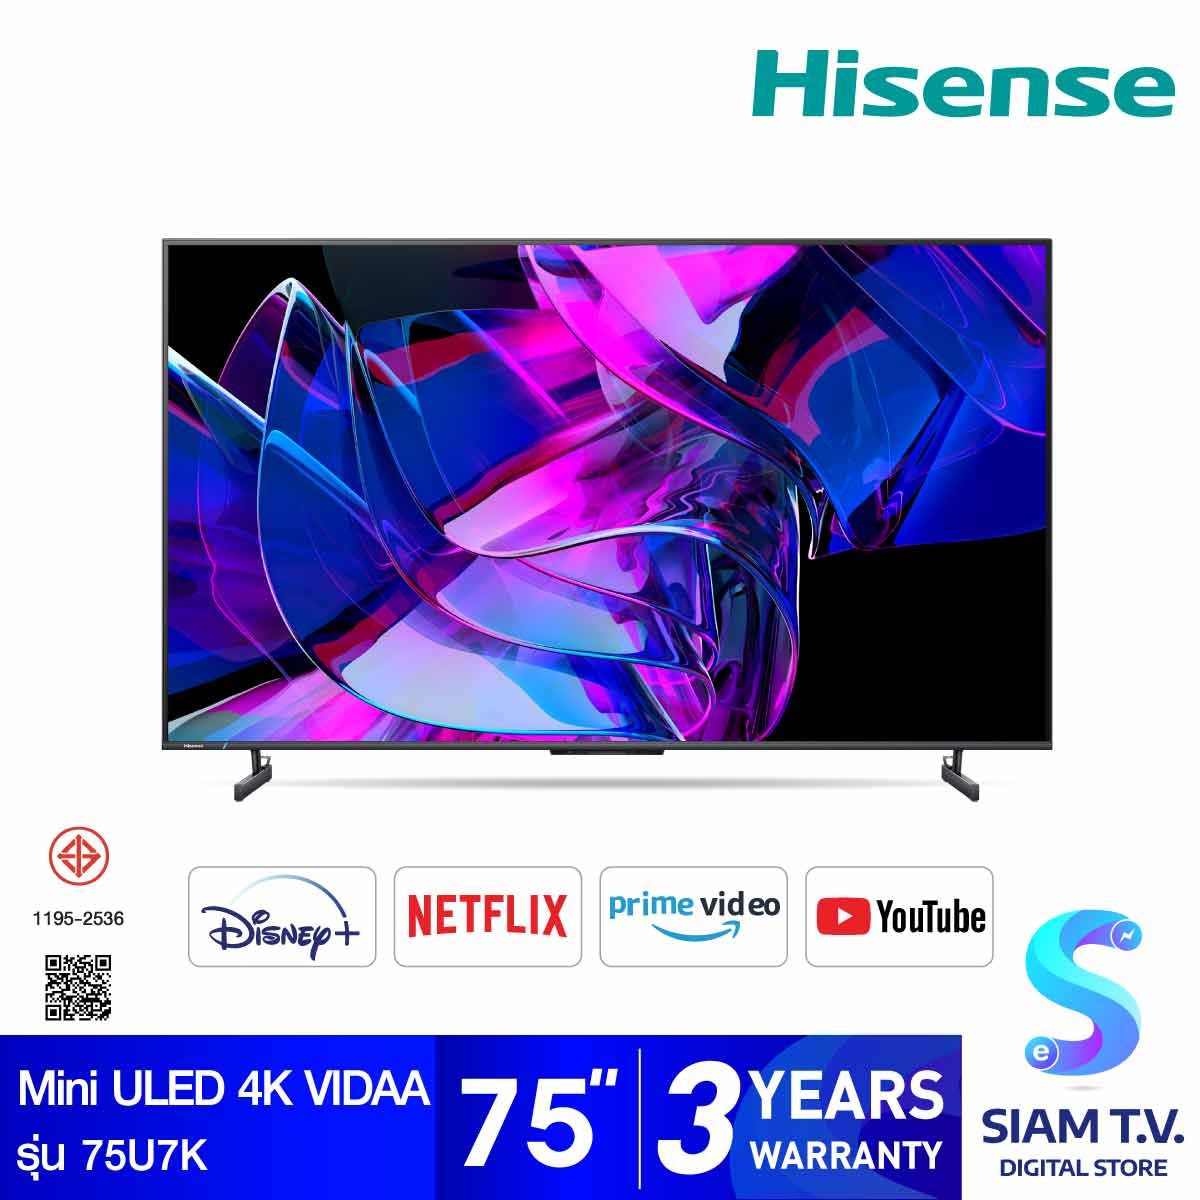 Hisense Mini ULED TV 4K VIDAA 144 Hzรุ่น 75U7K สมาร์ททีวี 4K ขนาด 75 นิ้ว